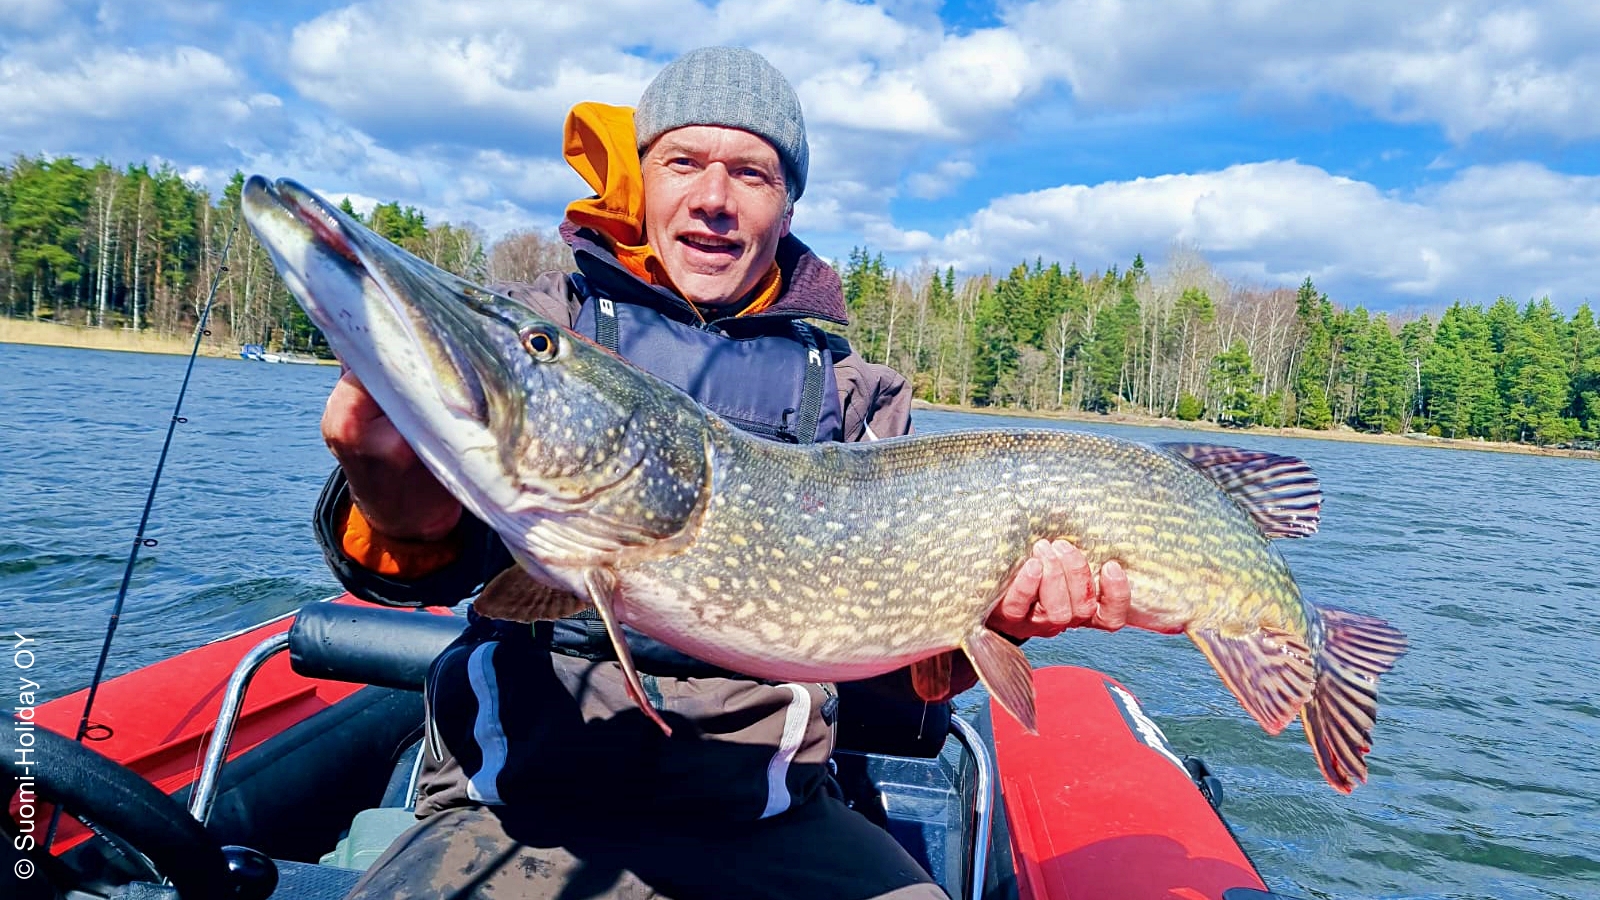 Trophy pike fishing in Finland